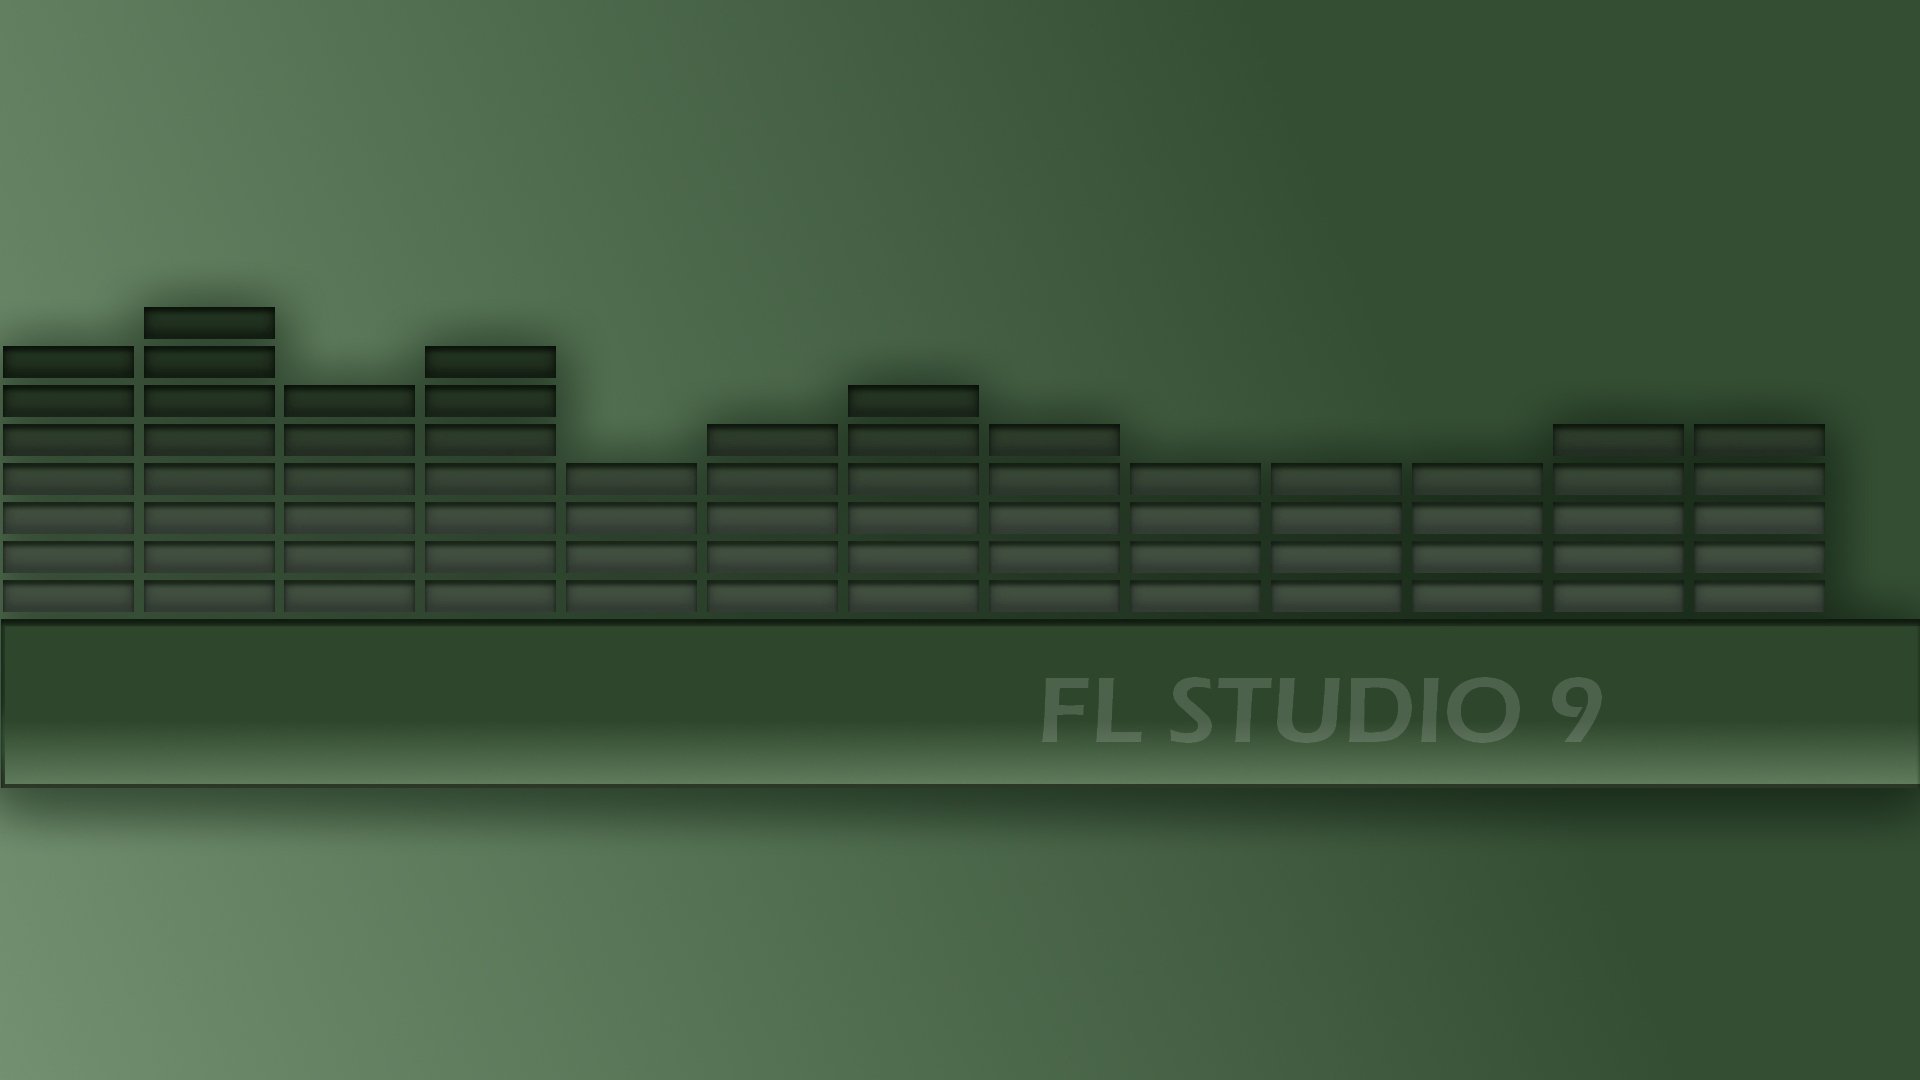 fl studio 12 producer edition hd wallpaper